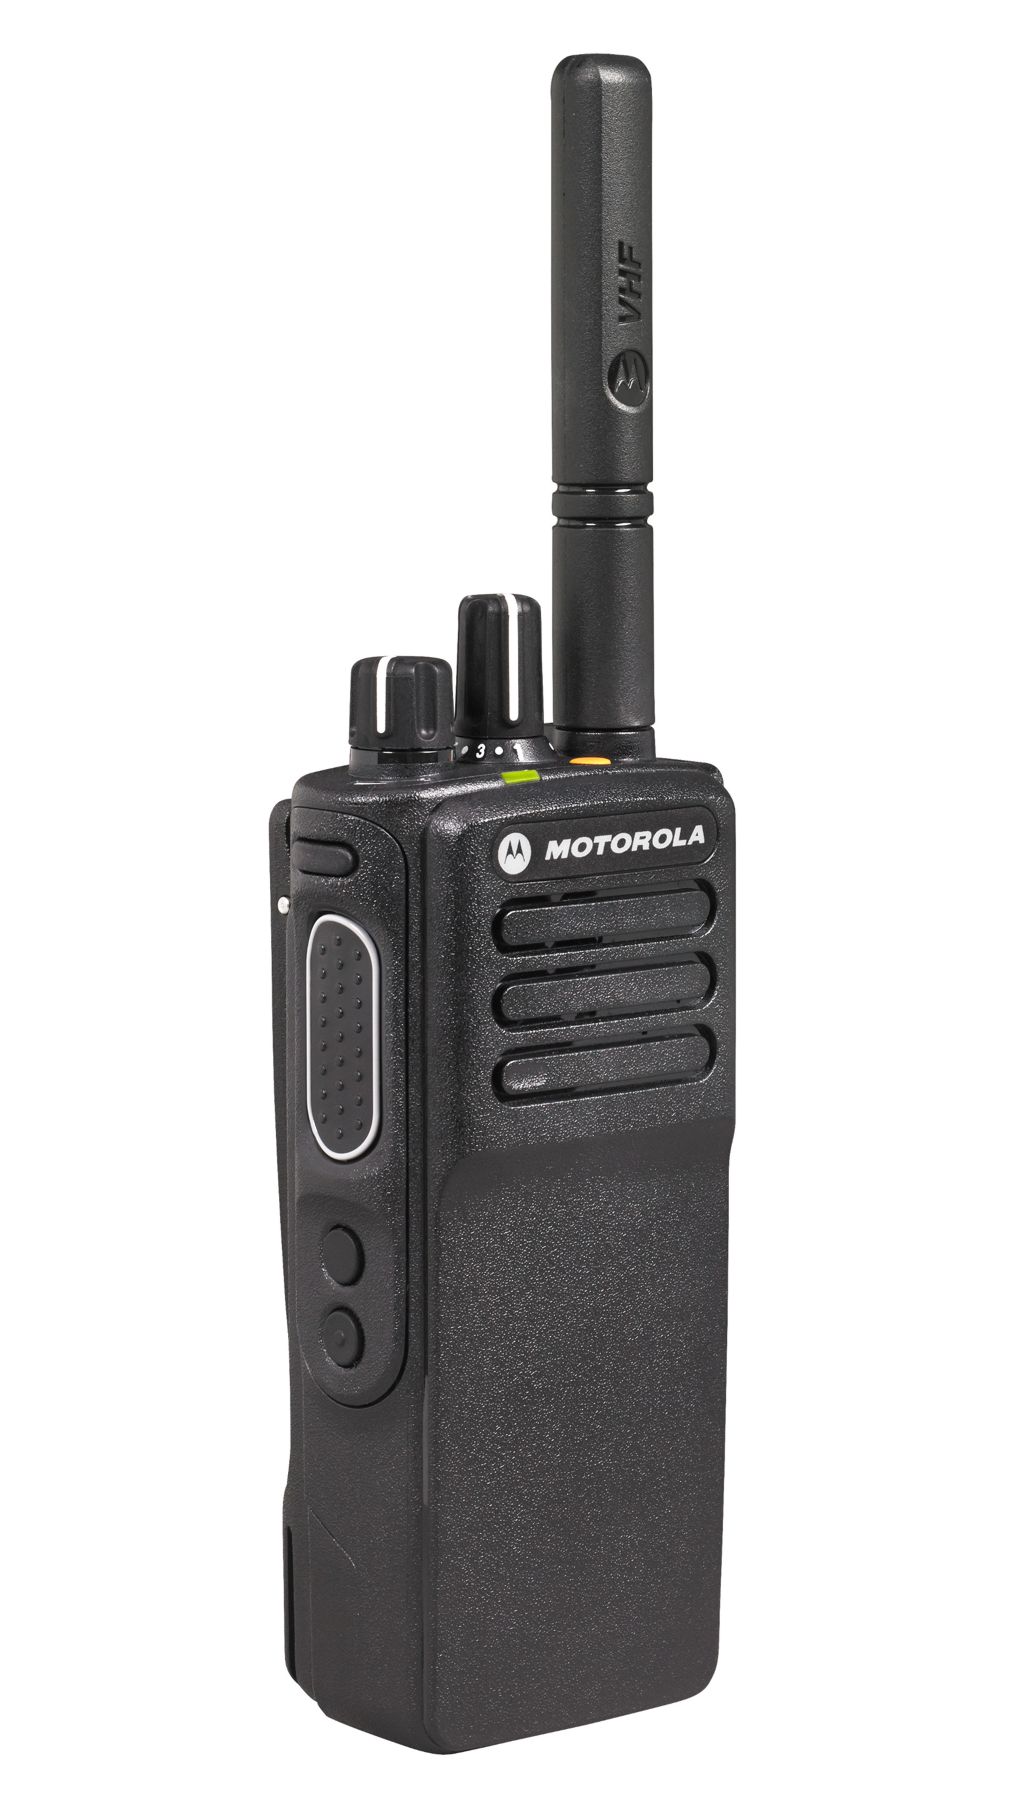 Motorola MOTOTRBO DP4400e VHF 136-174 MHz without accessories PBER302C MDH56JDC9VA1AN